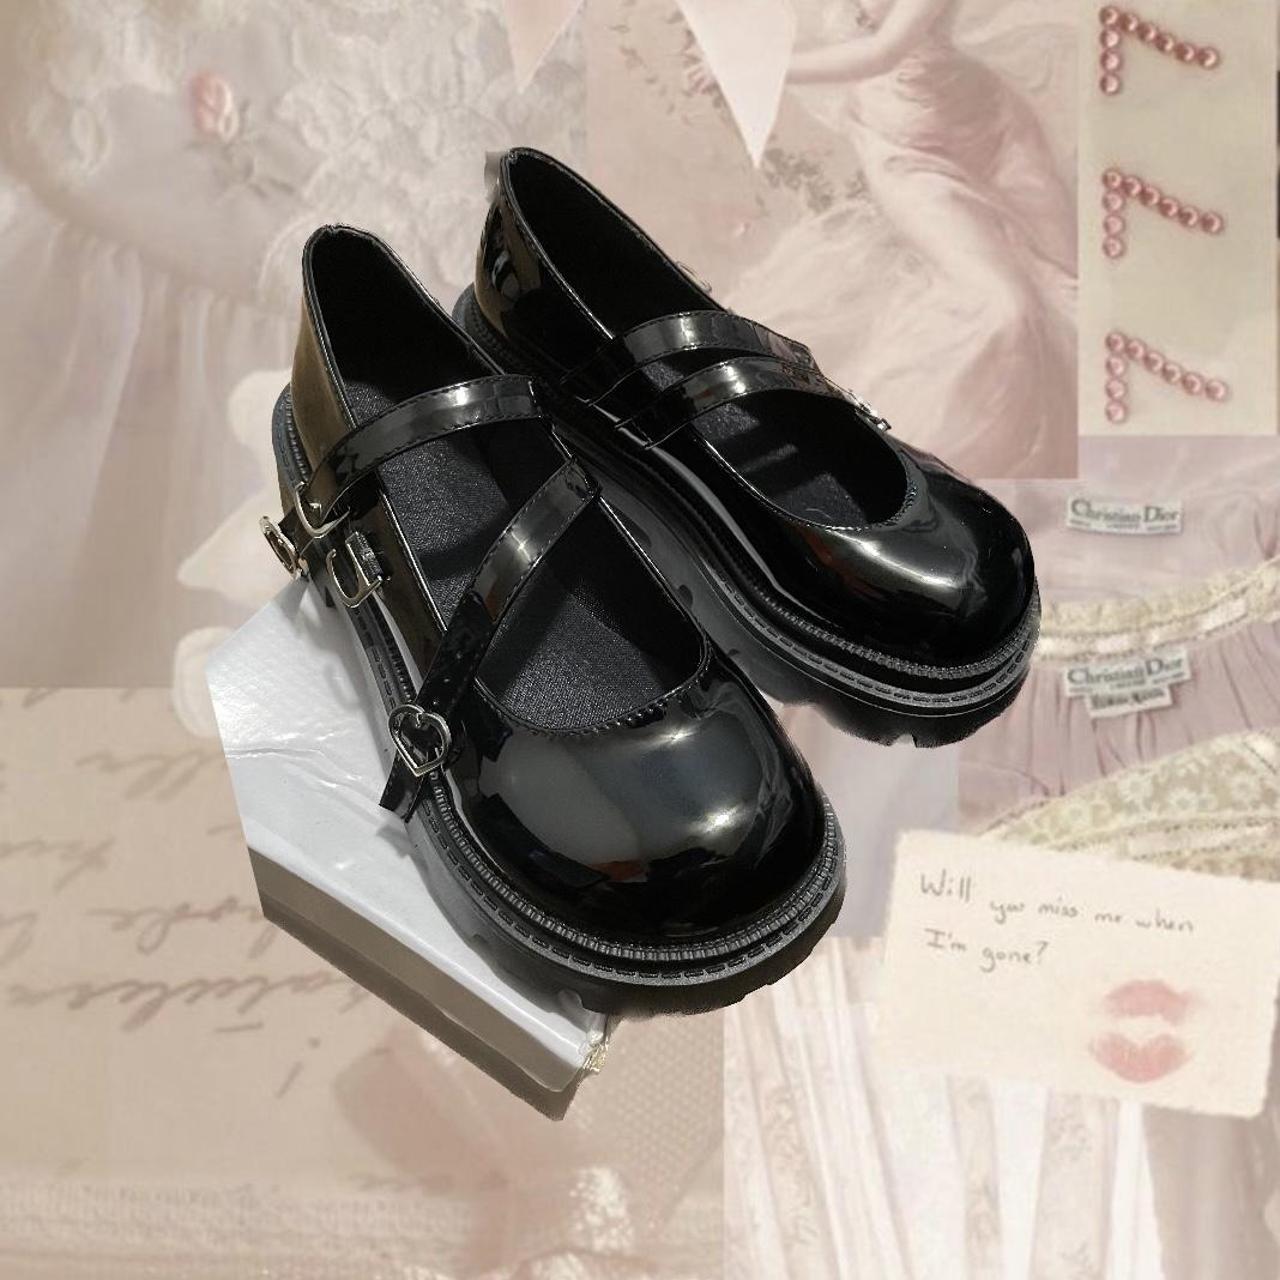 Mary Jane platform shoes ♡ Chunky heel w/ buckle... - Depop